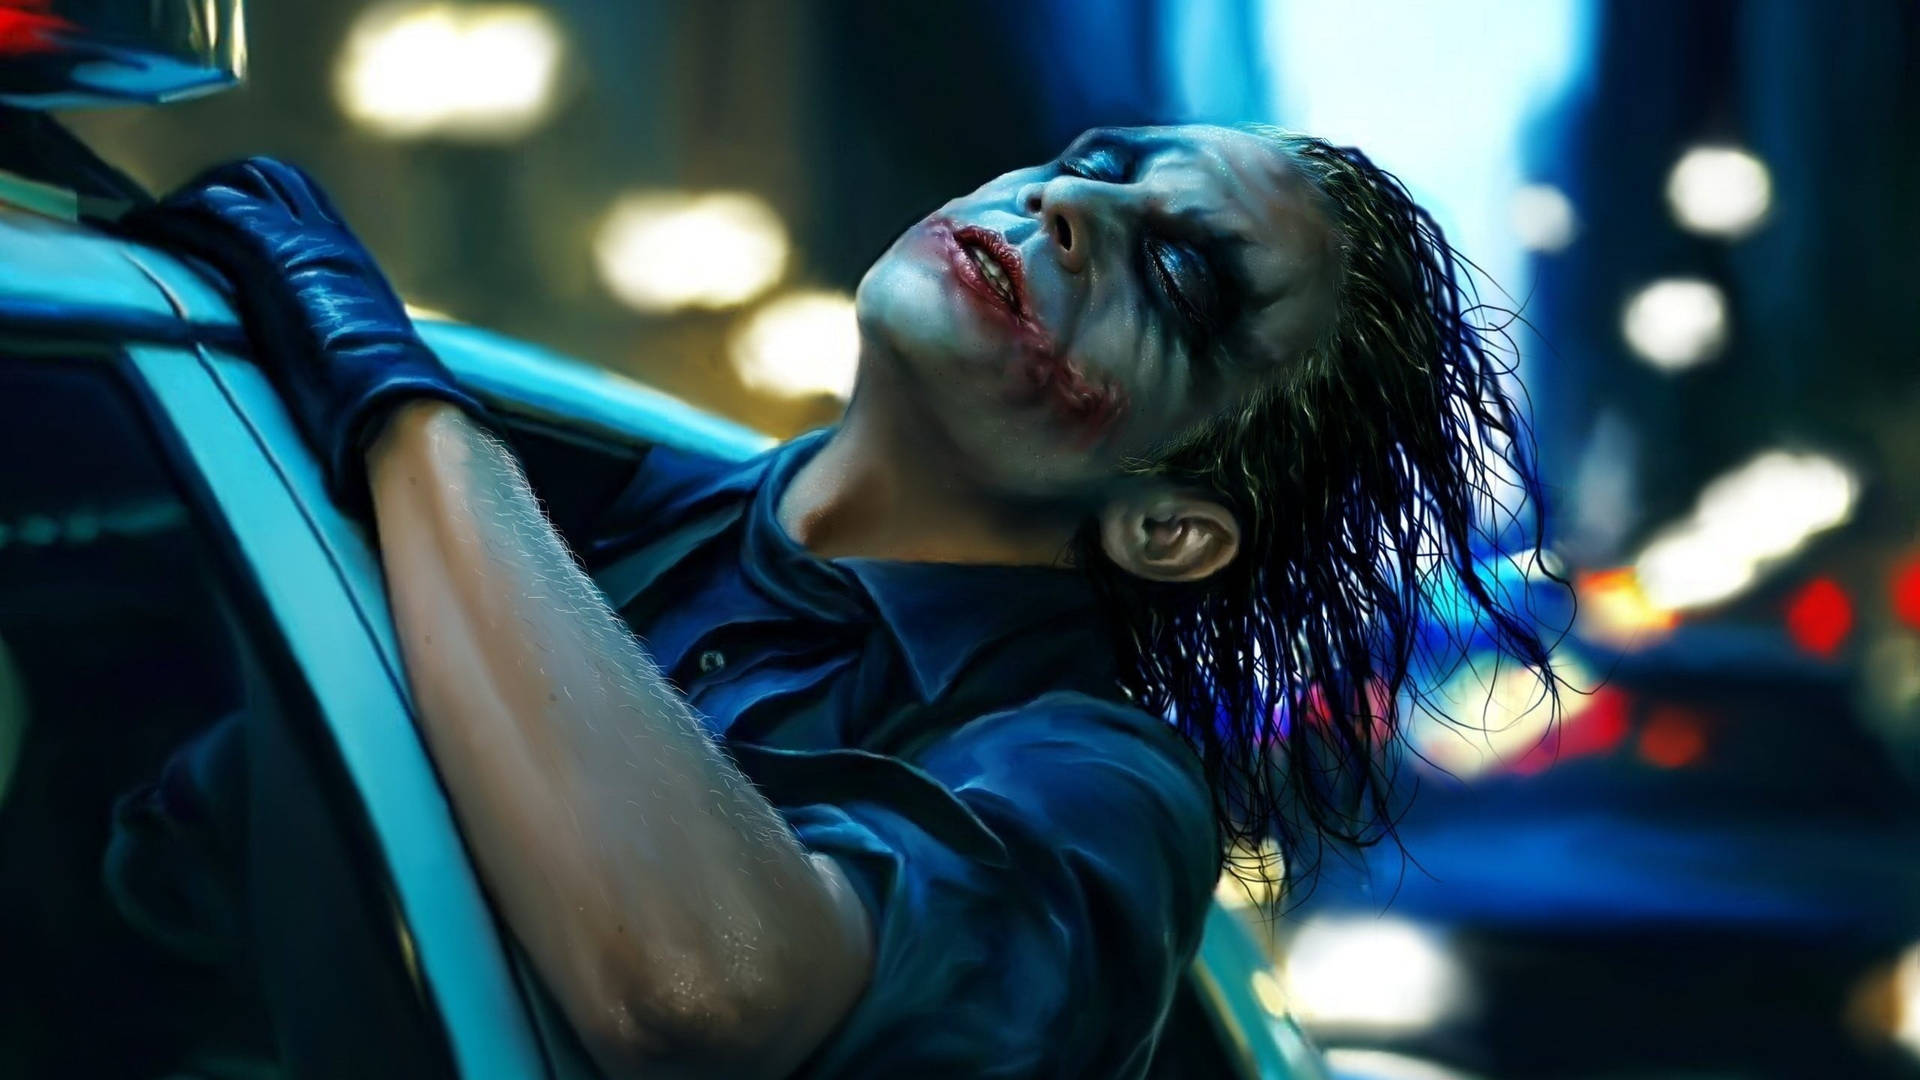 Heath Ledger Joker In Police Car Background